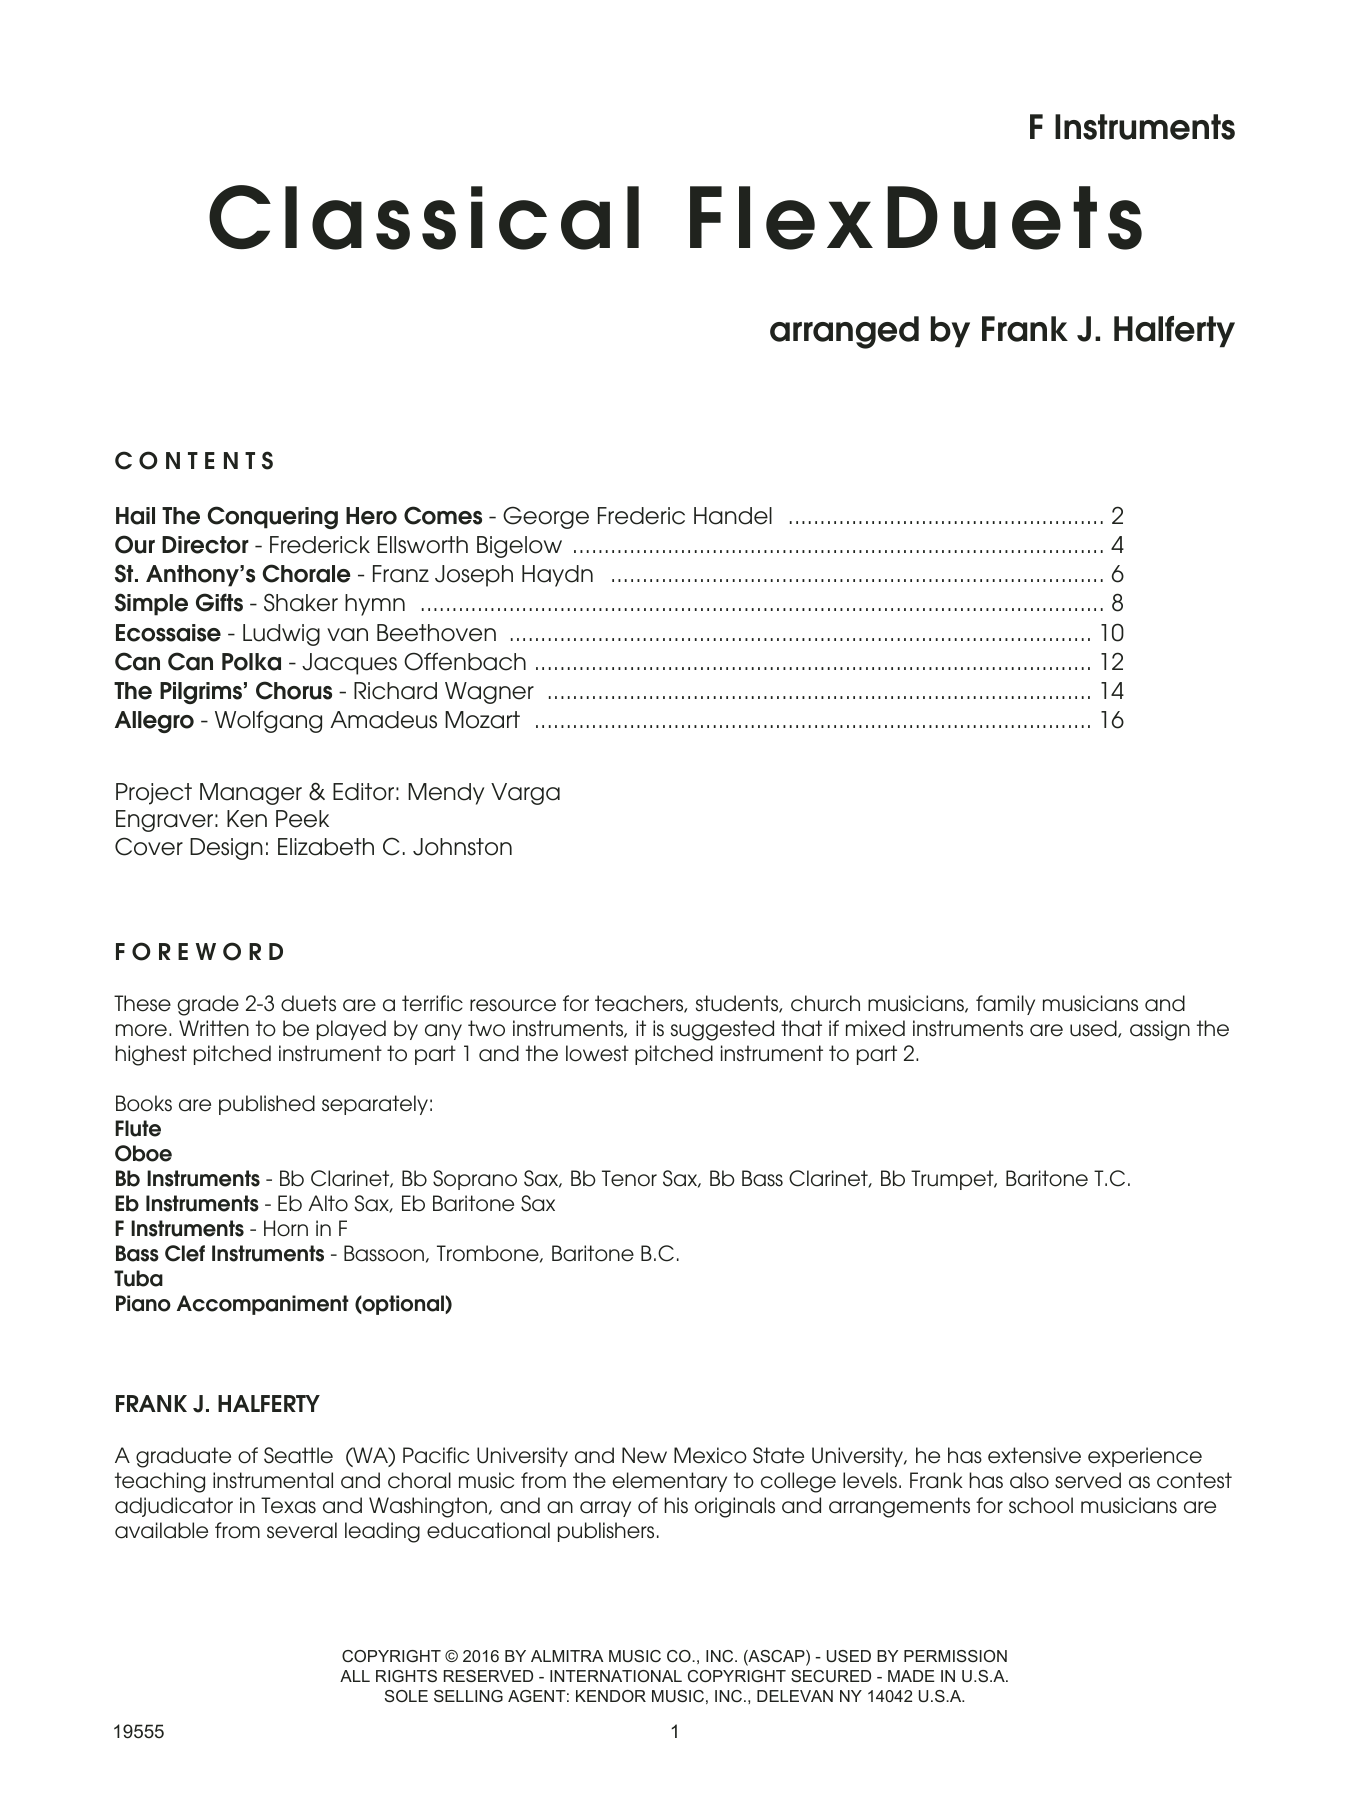 Frank J. Halferty Classical FlexDuets - F Instruments sheet music notes and chords. Download Printable PDF.